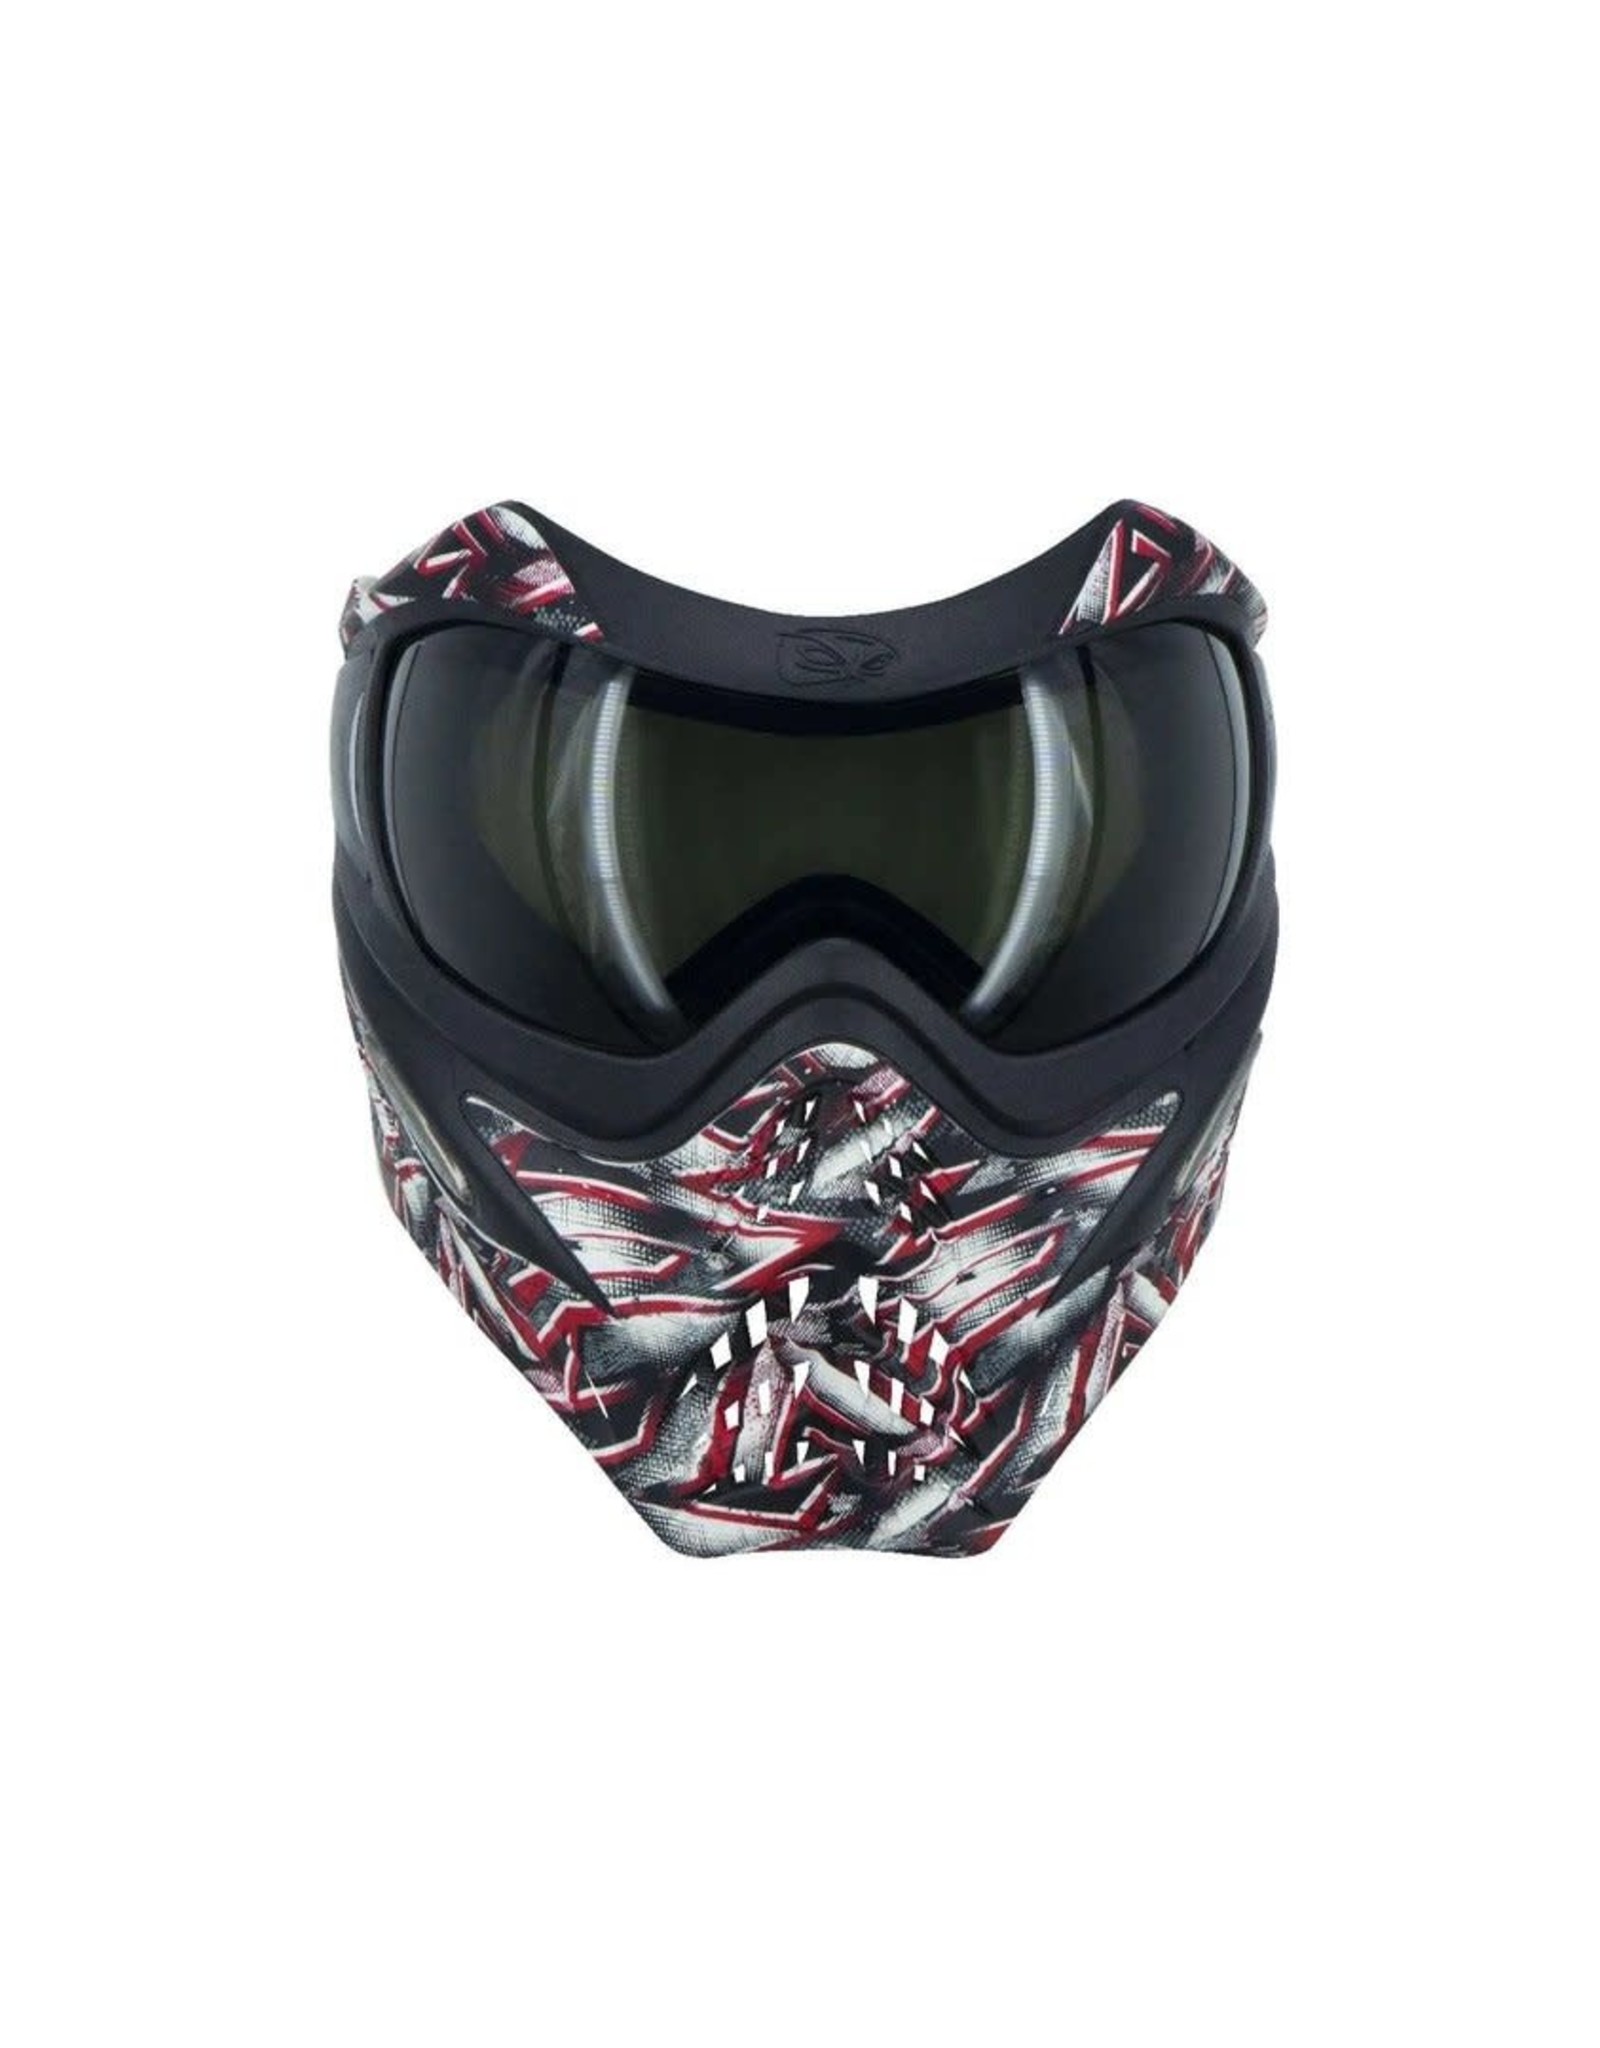 Vforce VForce Grill SE Spangled Anti-Hero Paintball Mask - Smoke Lens